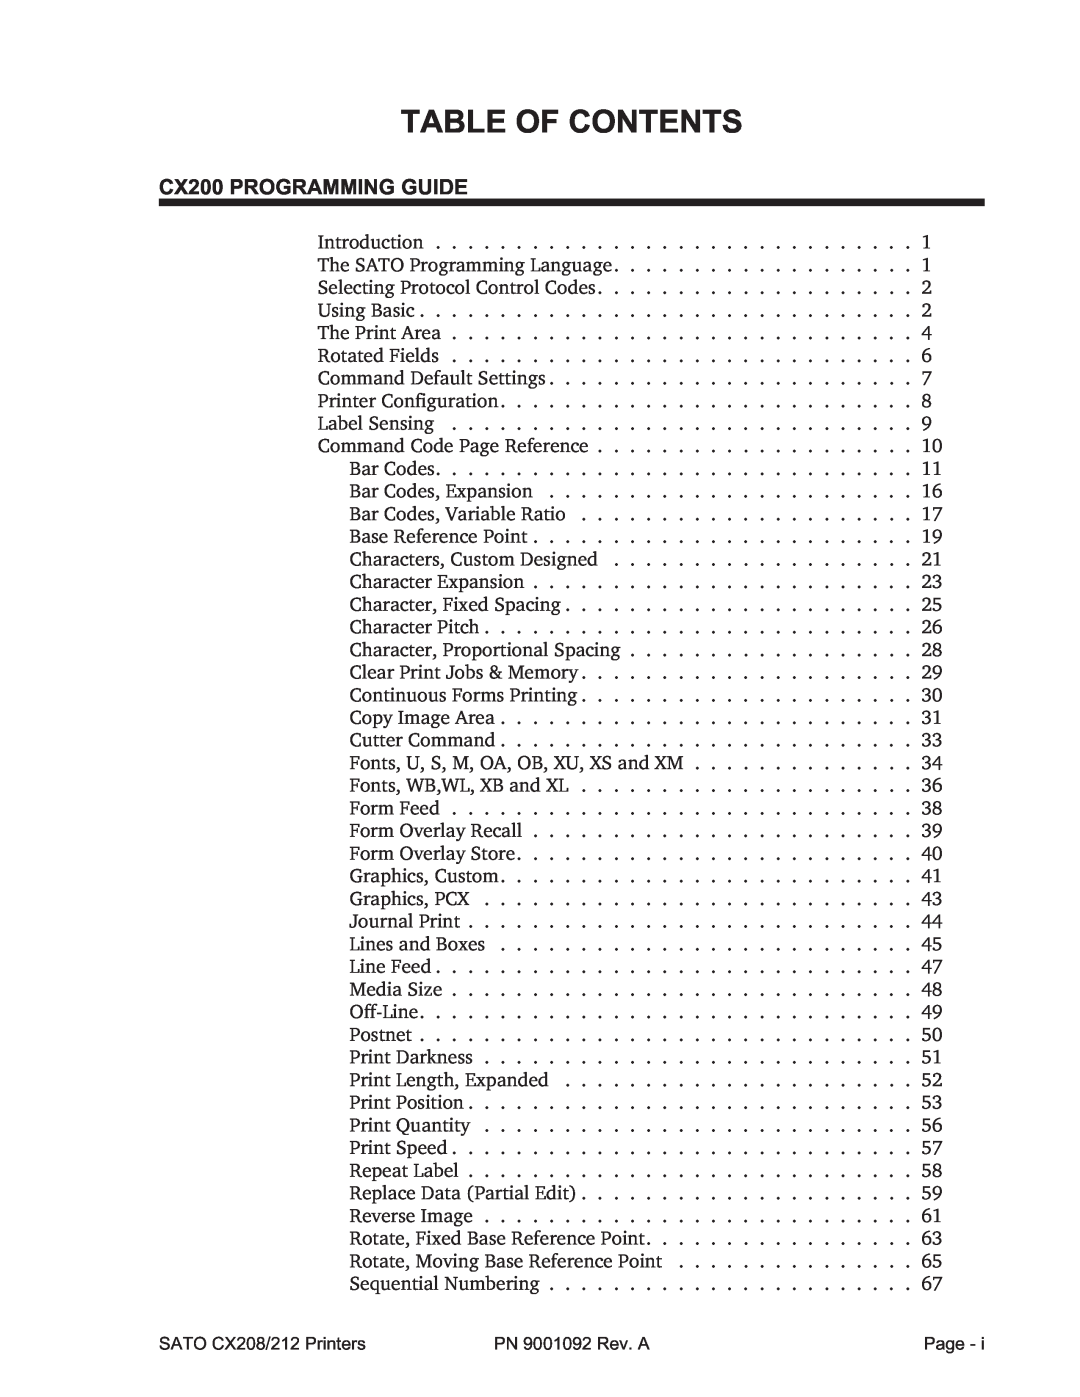 SATO CX208/212 manual Table Of Contents, CX200 PROGRAMMING GUIDE 